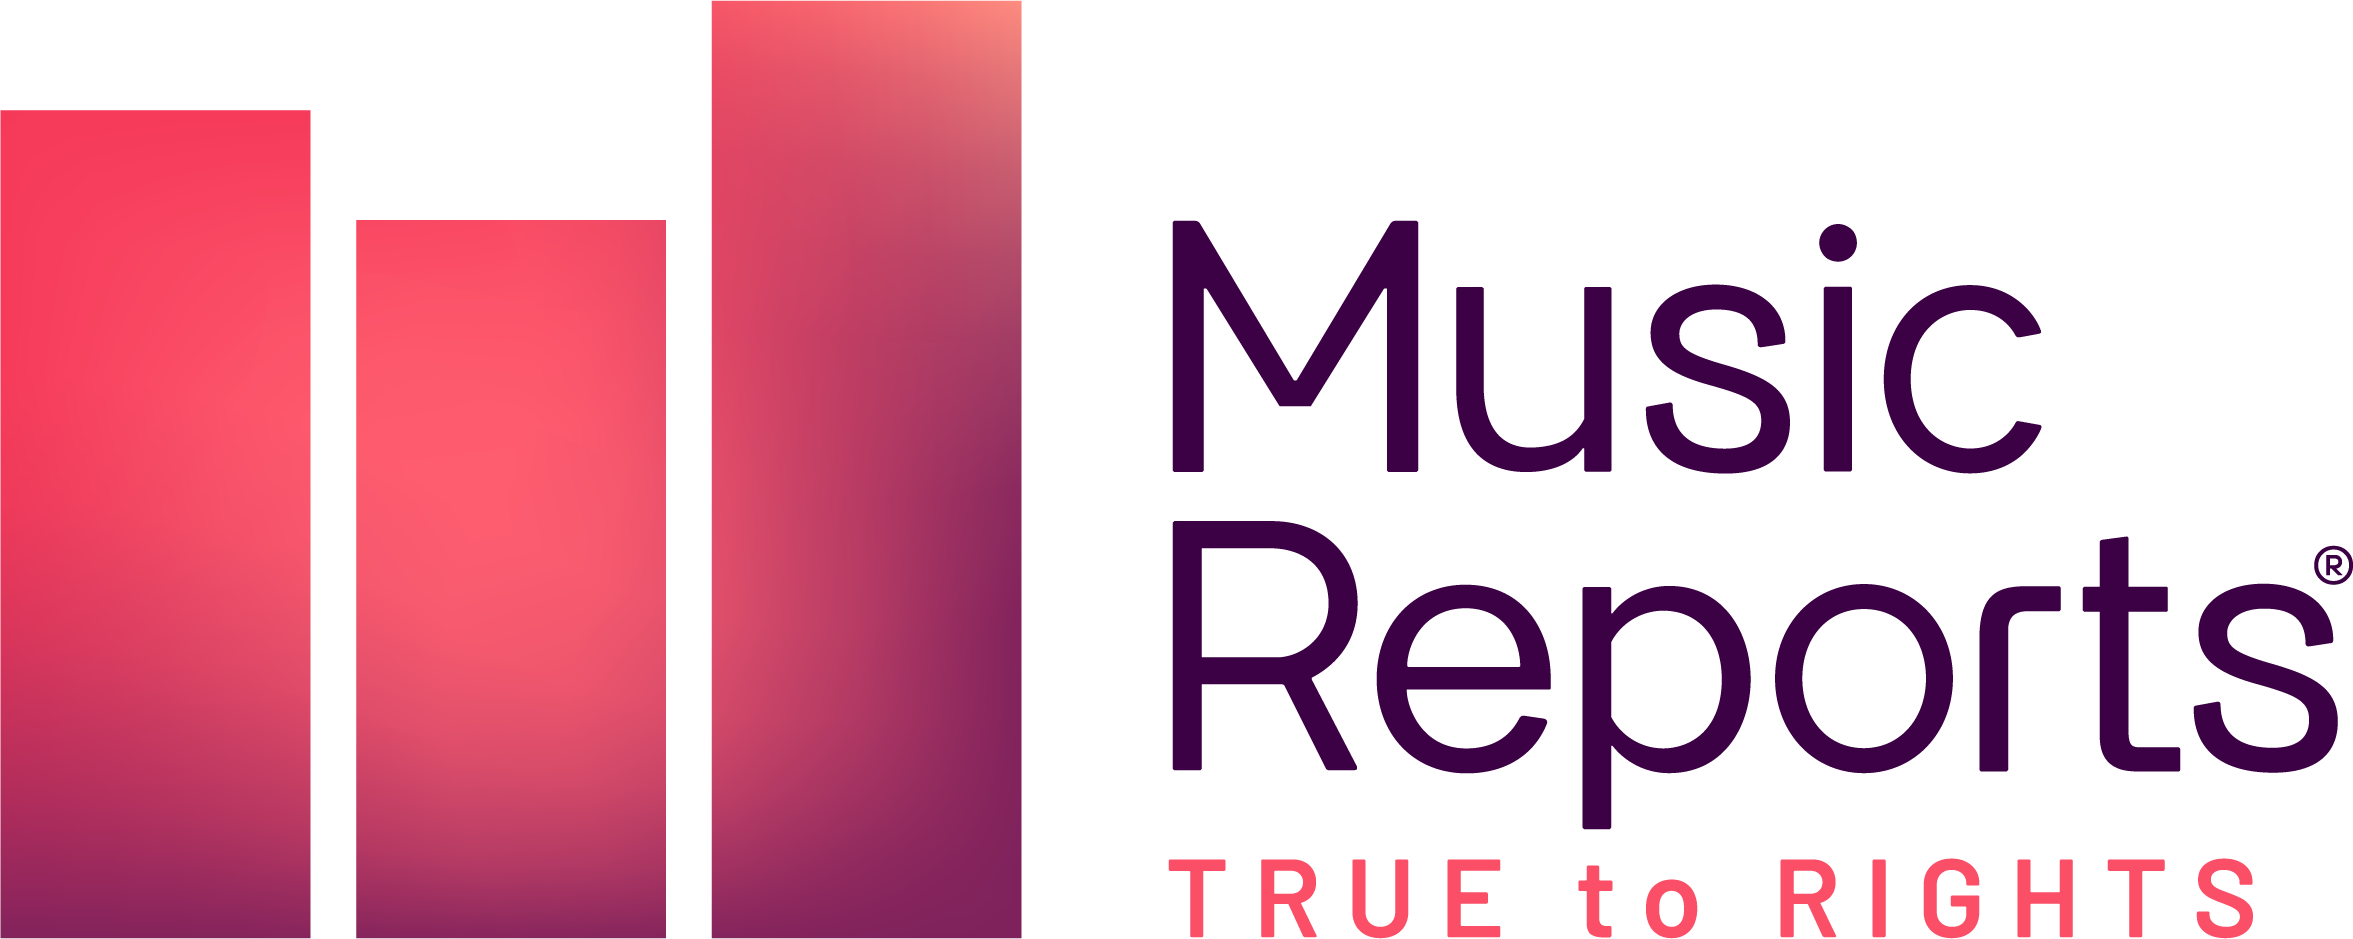 Music Reports Logo